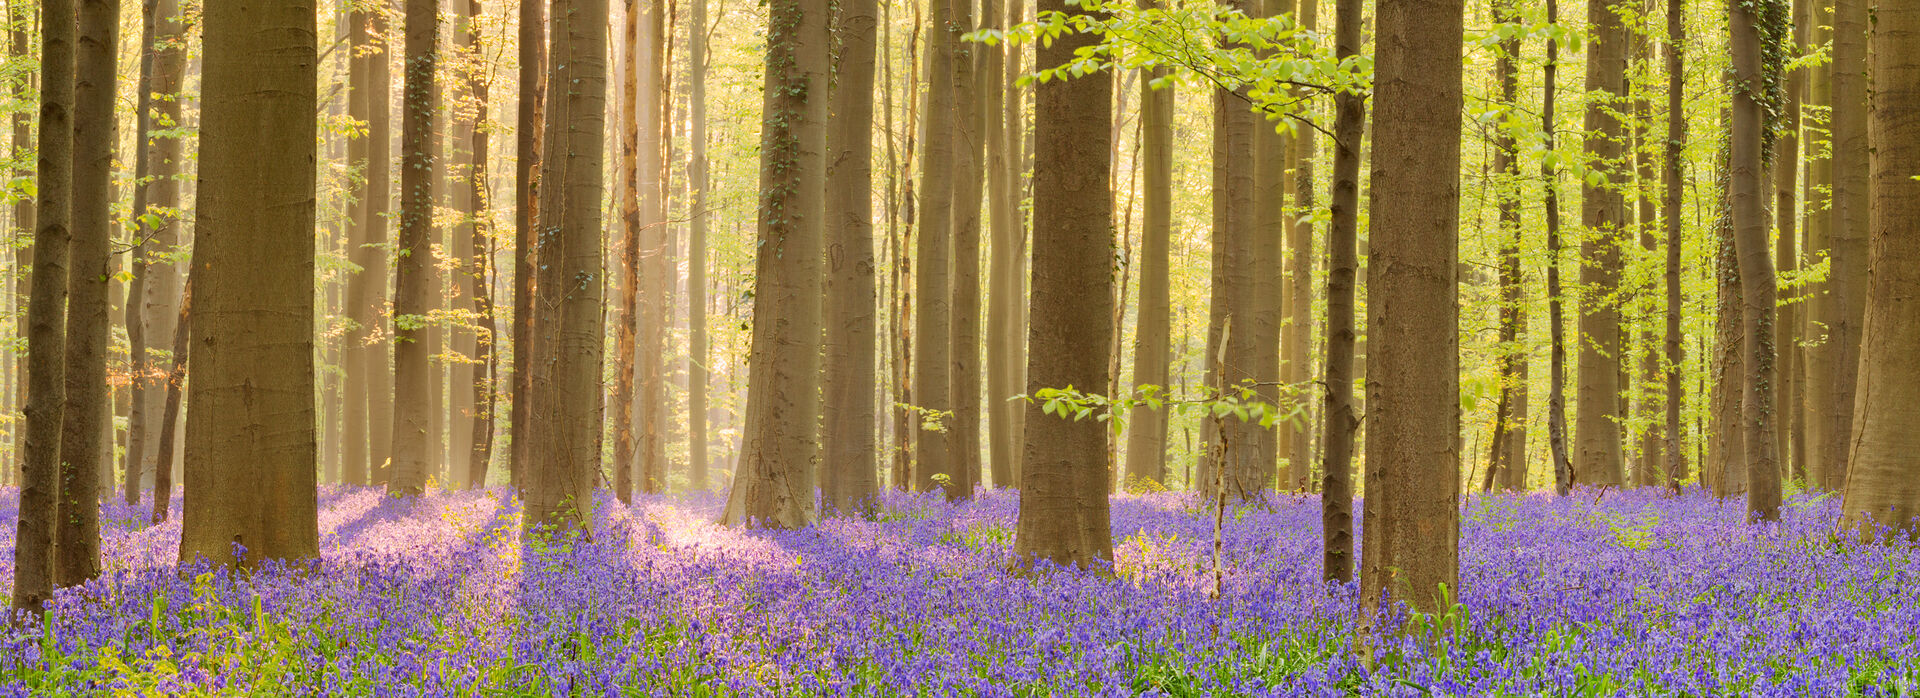 Bluebell Forest Belgium